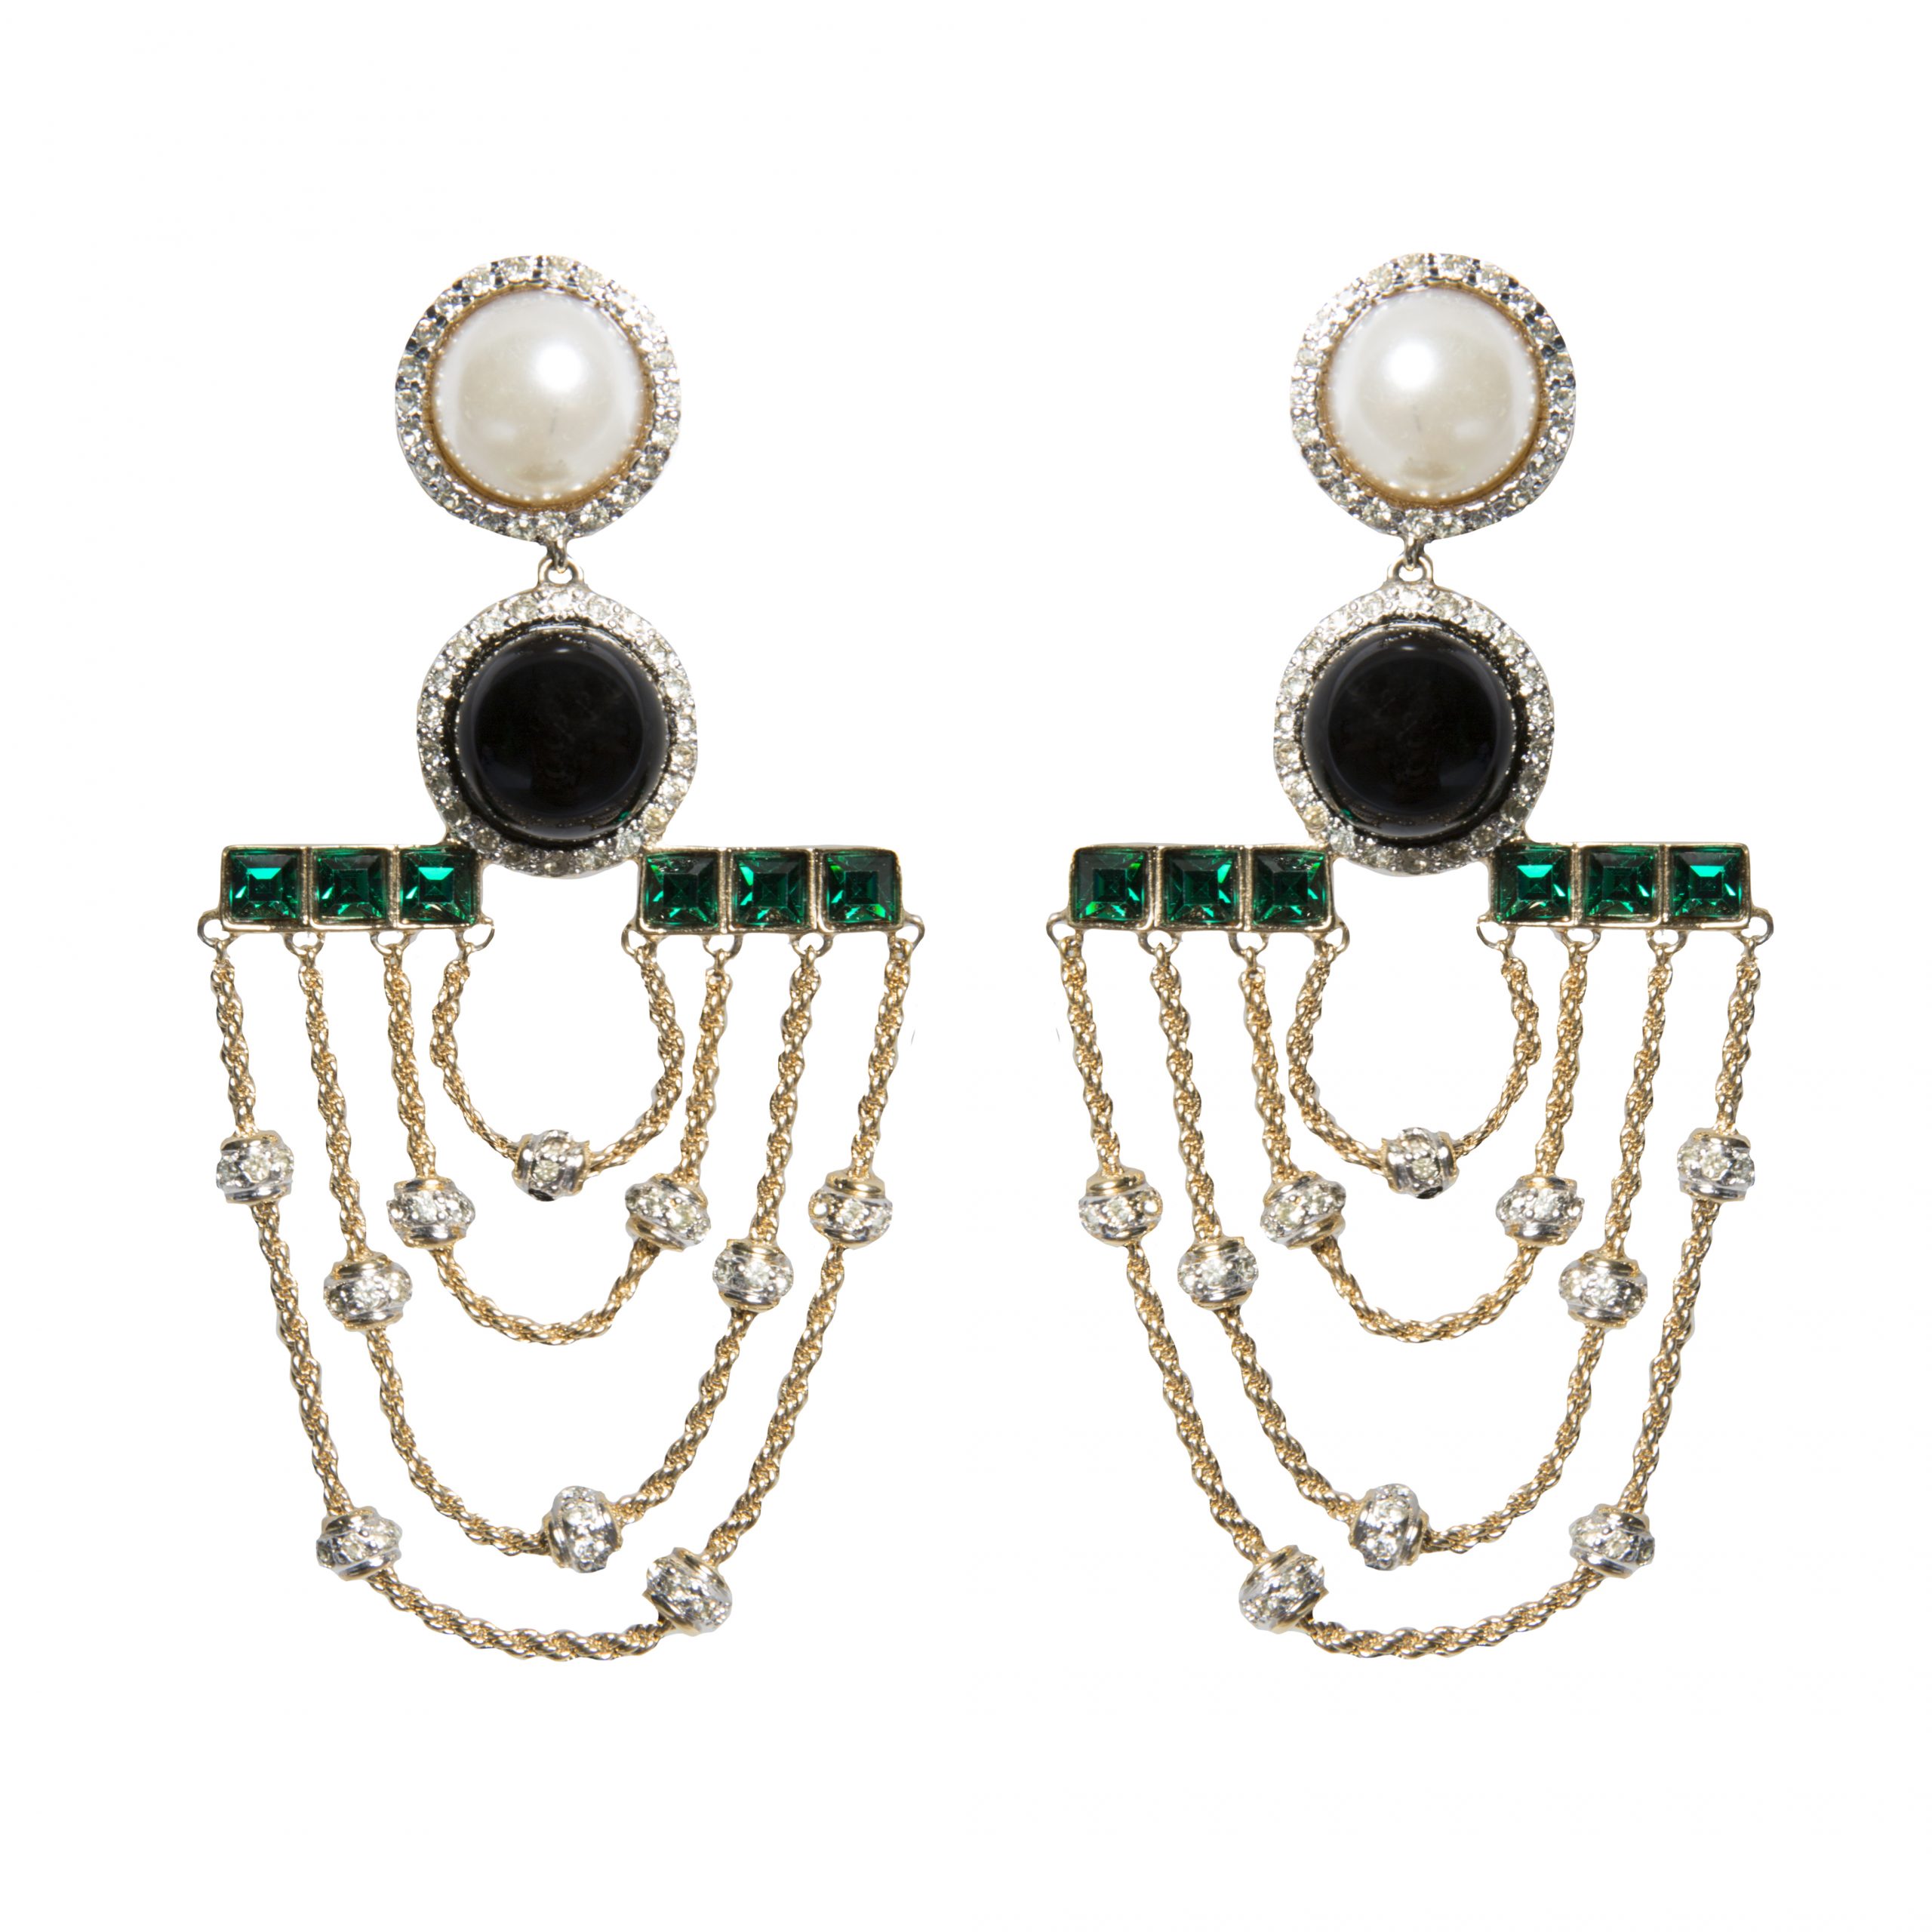 Vintage haute couture chandelier earrings